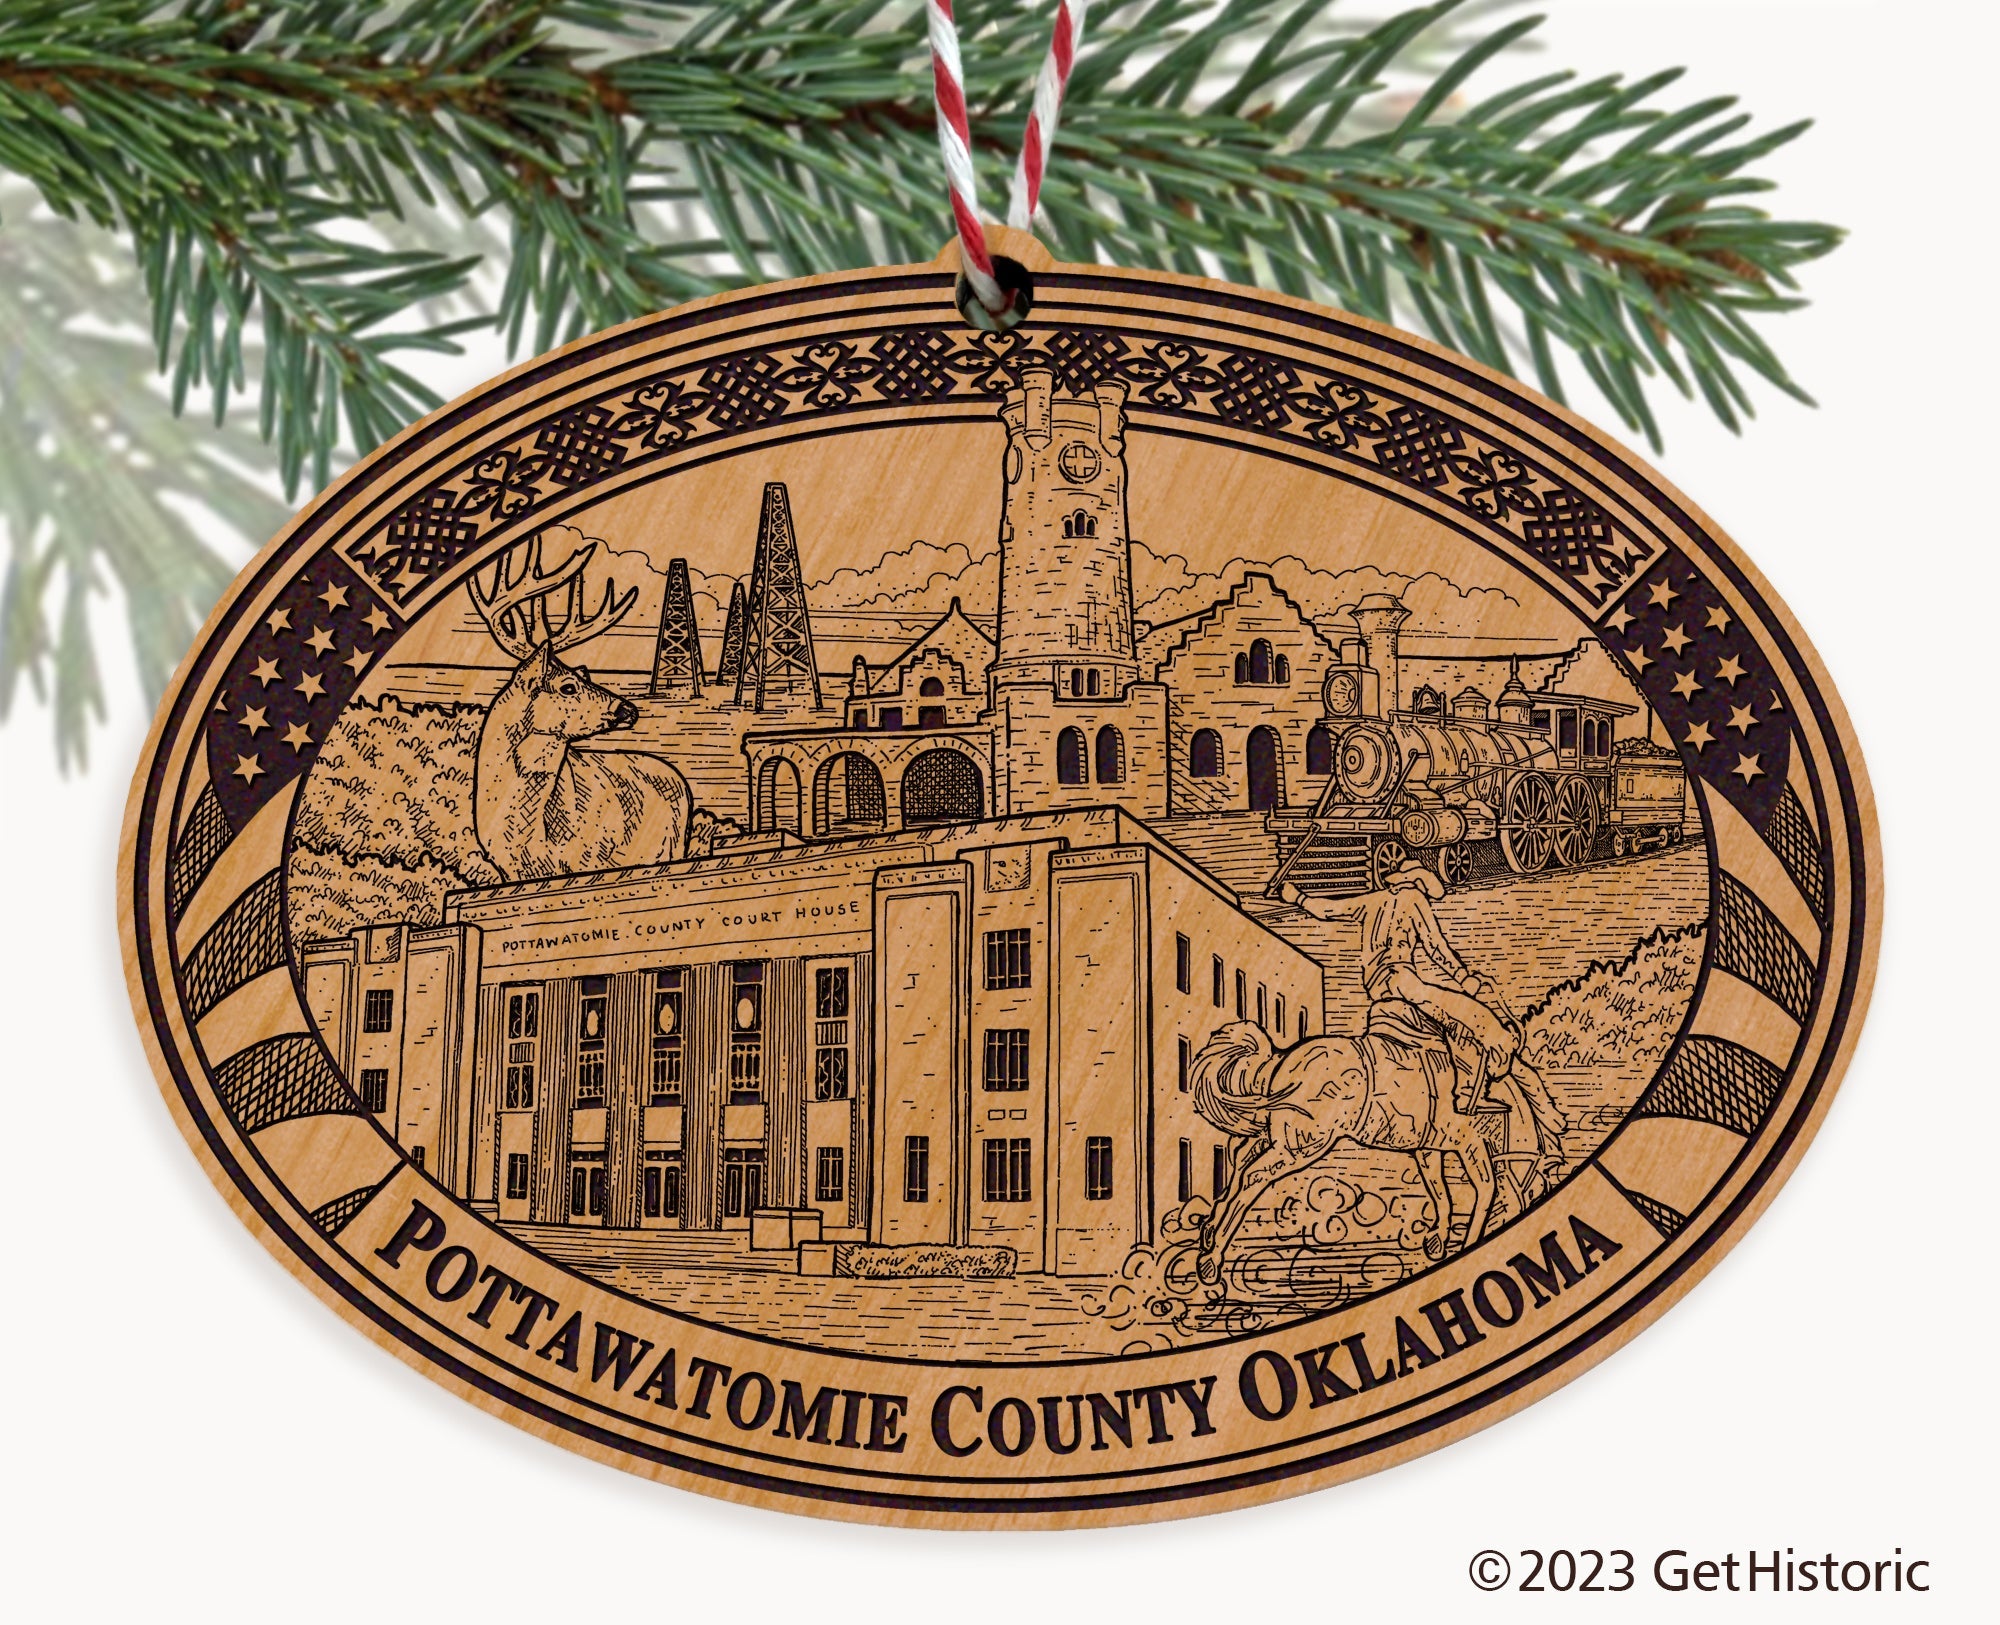 Pottawatomie County Oklahoma Engraved Natural Ornament